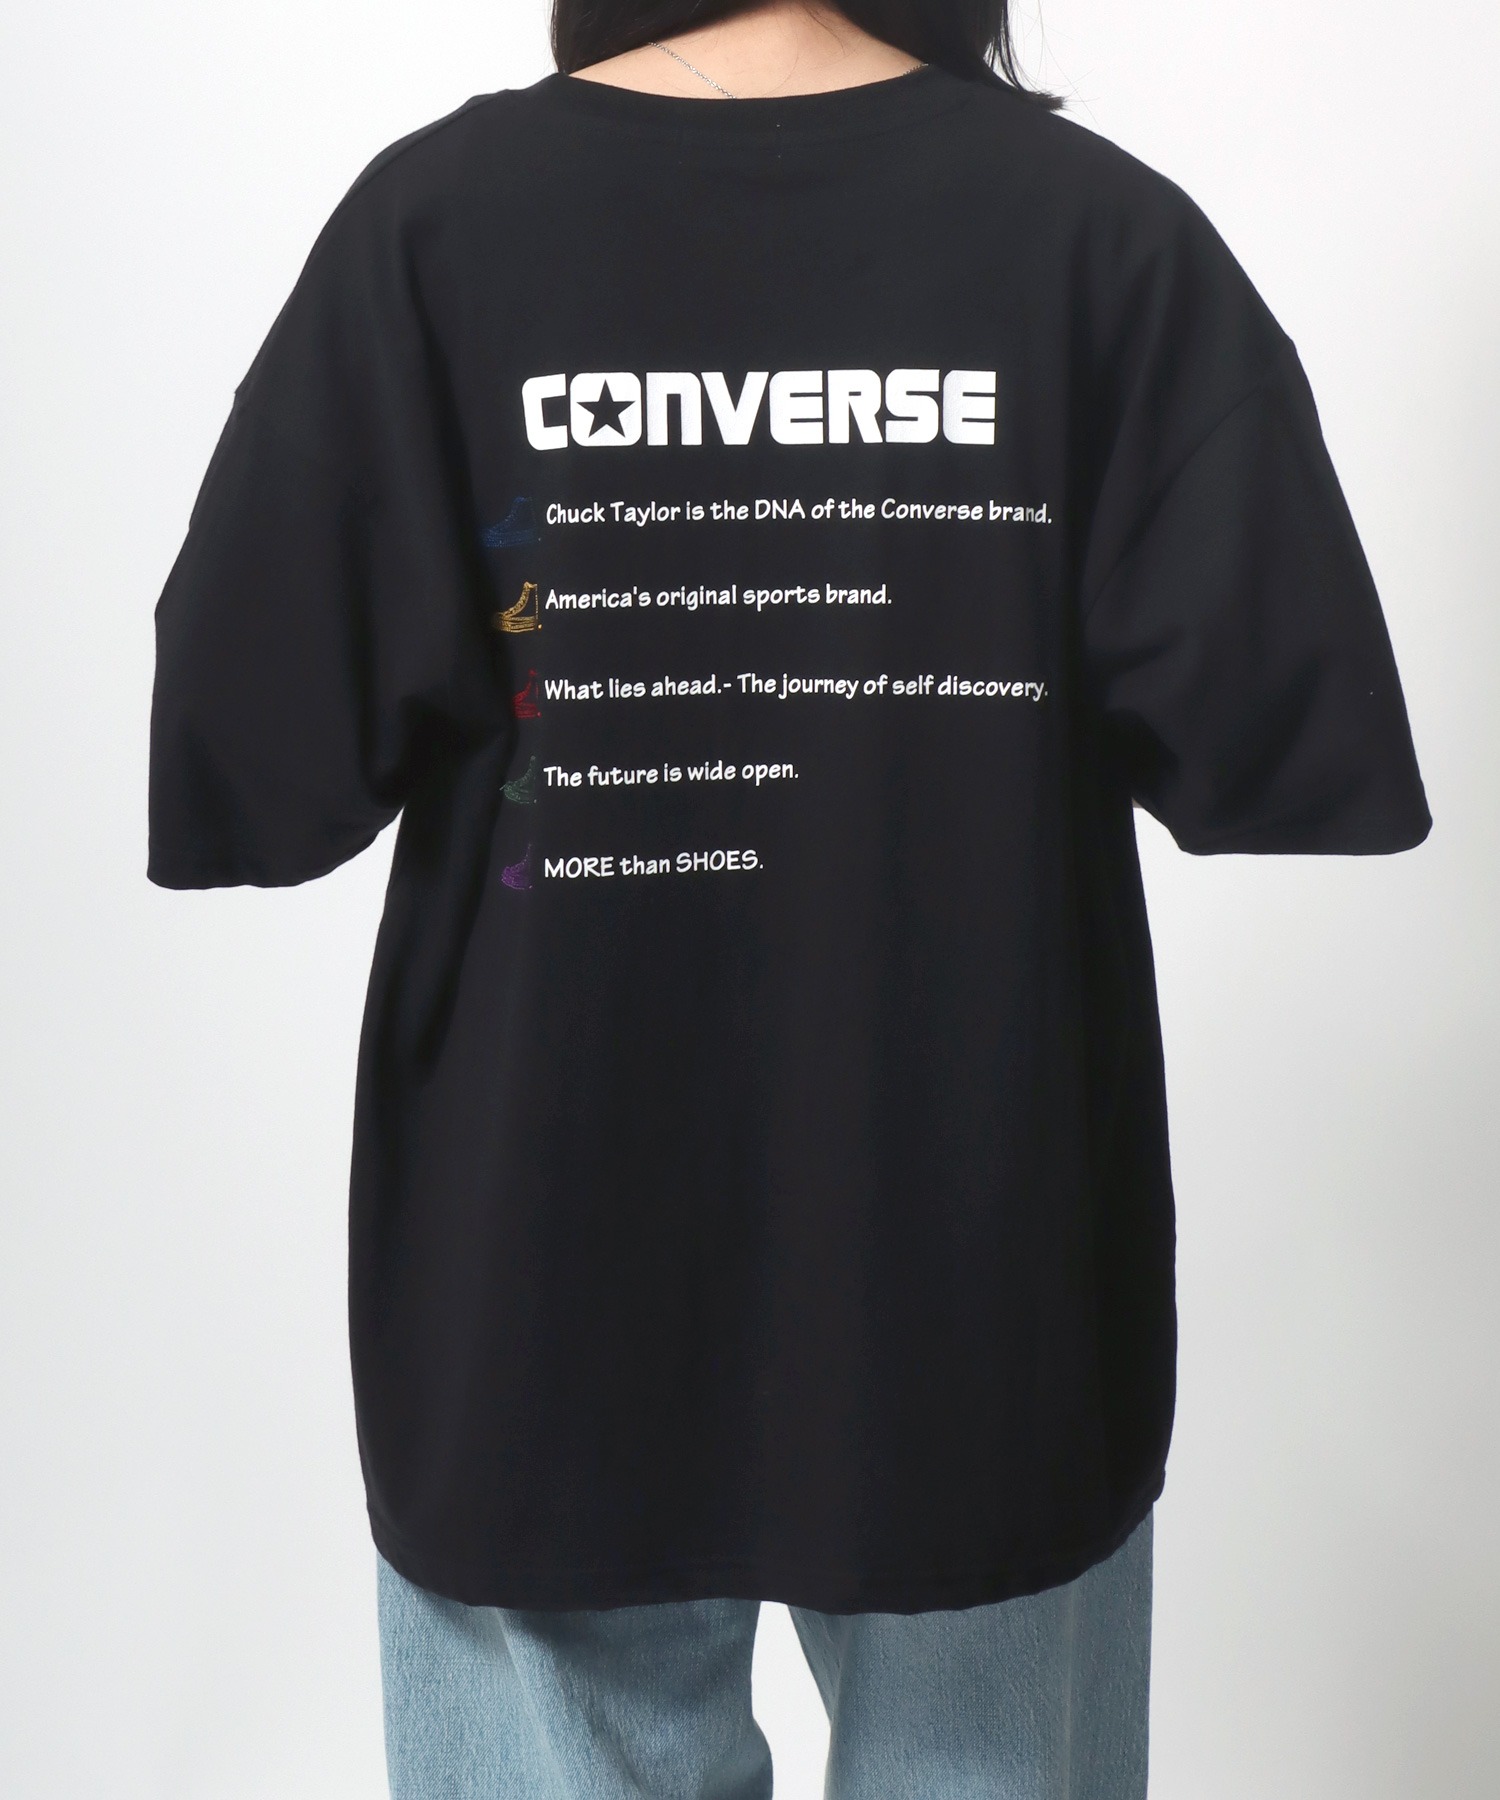 ★【CONVERSE】コンバース バックプリント Tシャツ 半袖 メンズ レディース カジュアル スニーカー